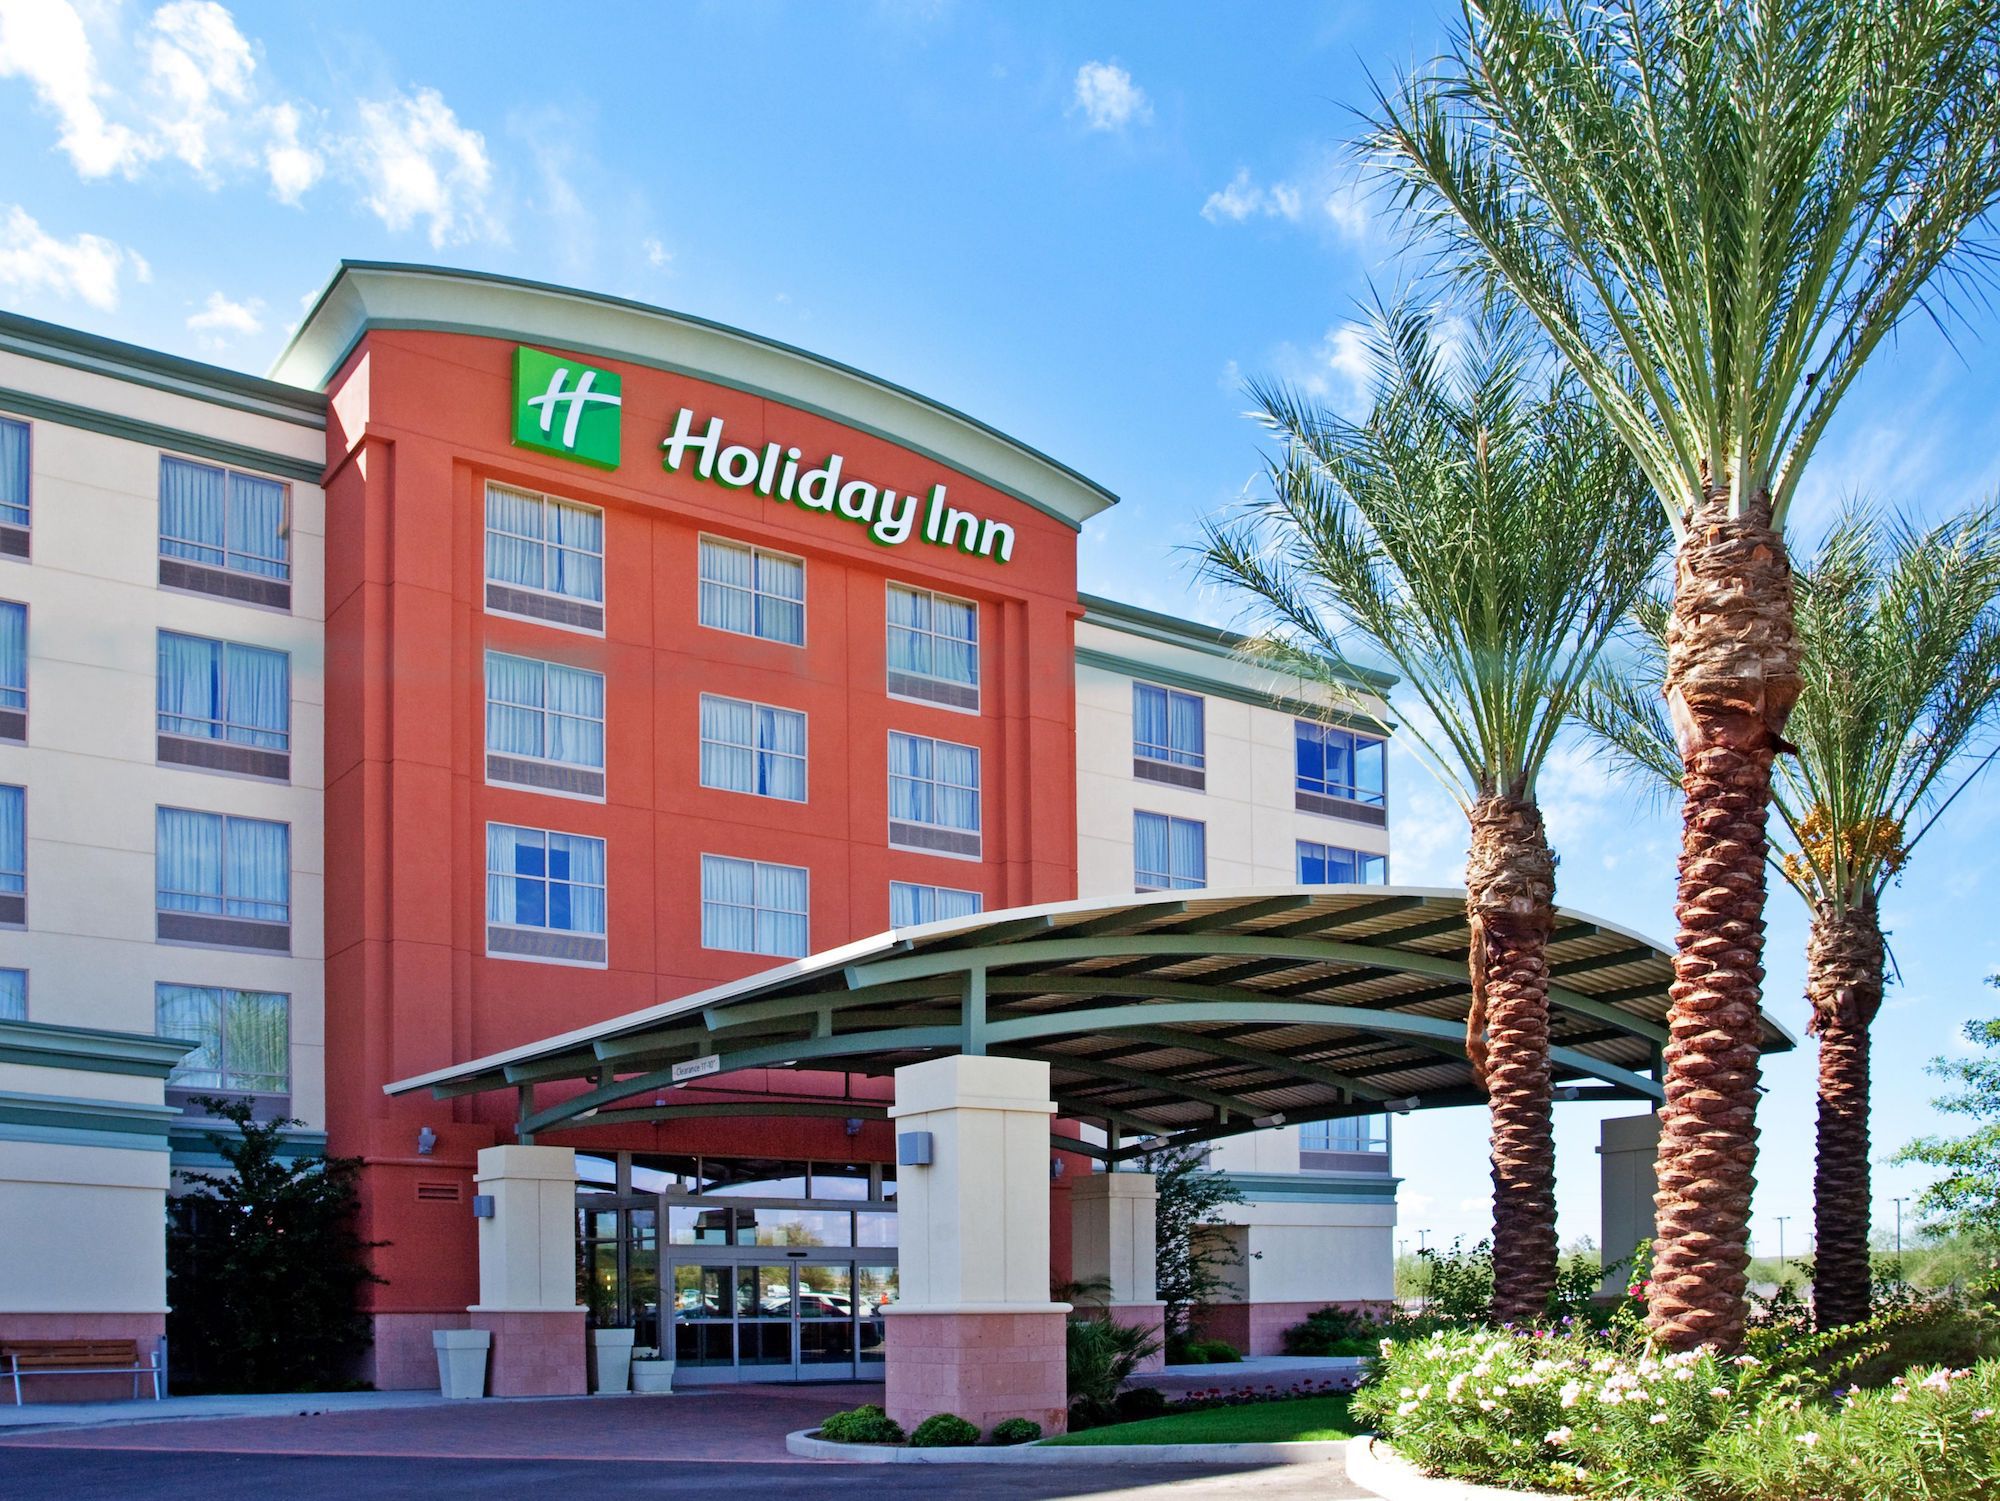 Photo of Holiday Inn & Suites Phoenix Airport North, Phoenix, AZ